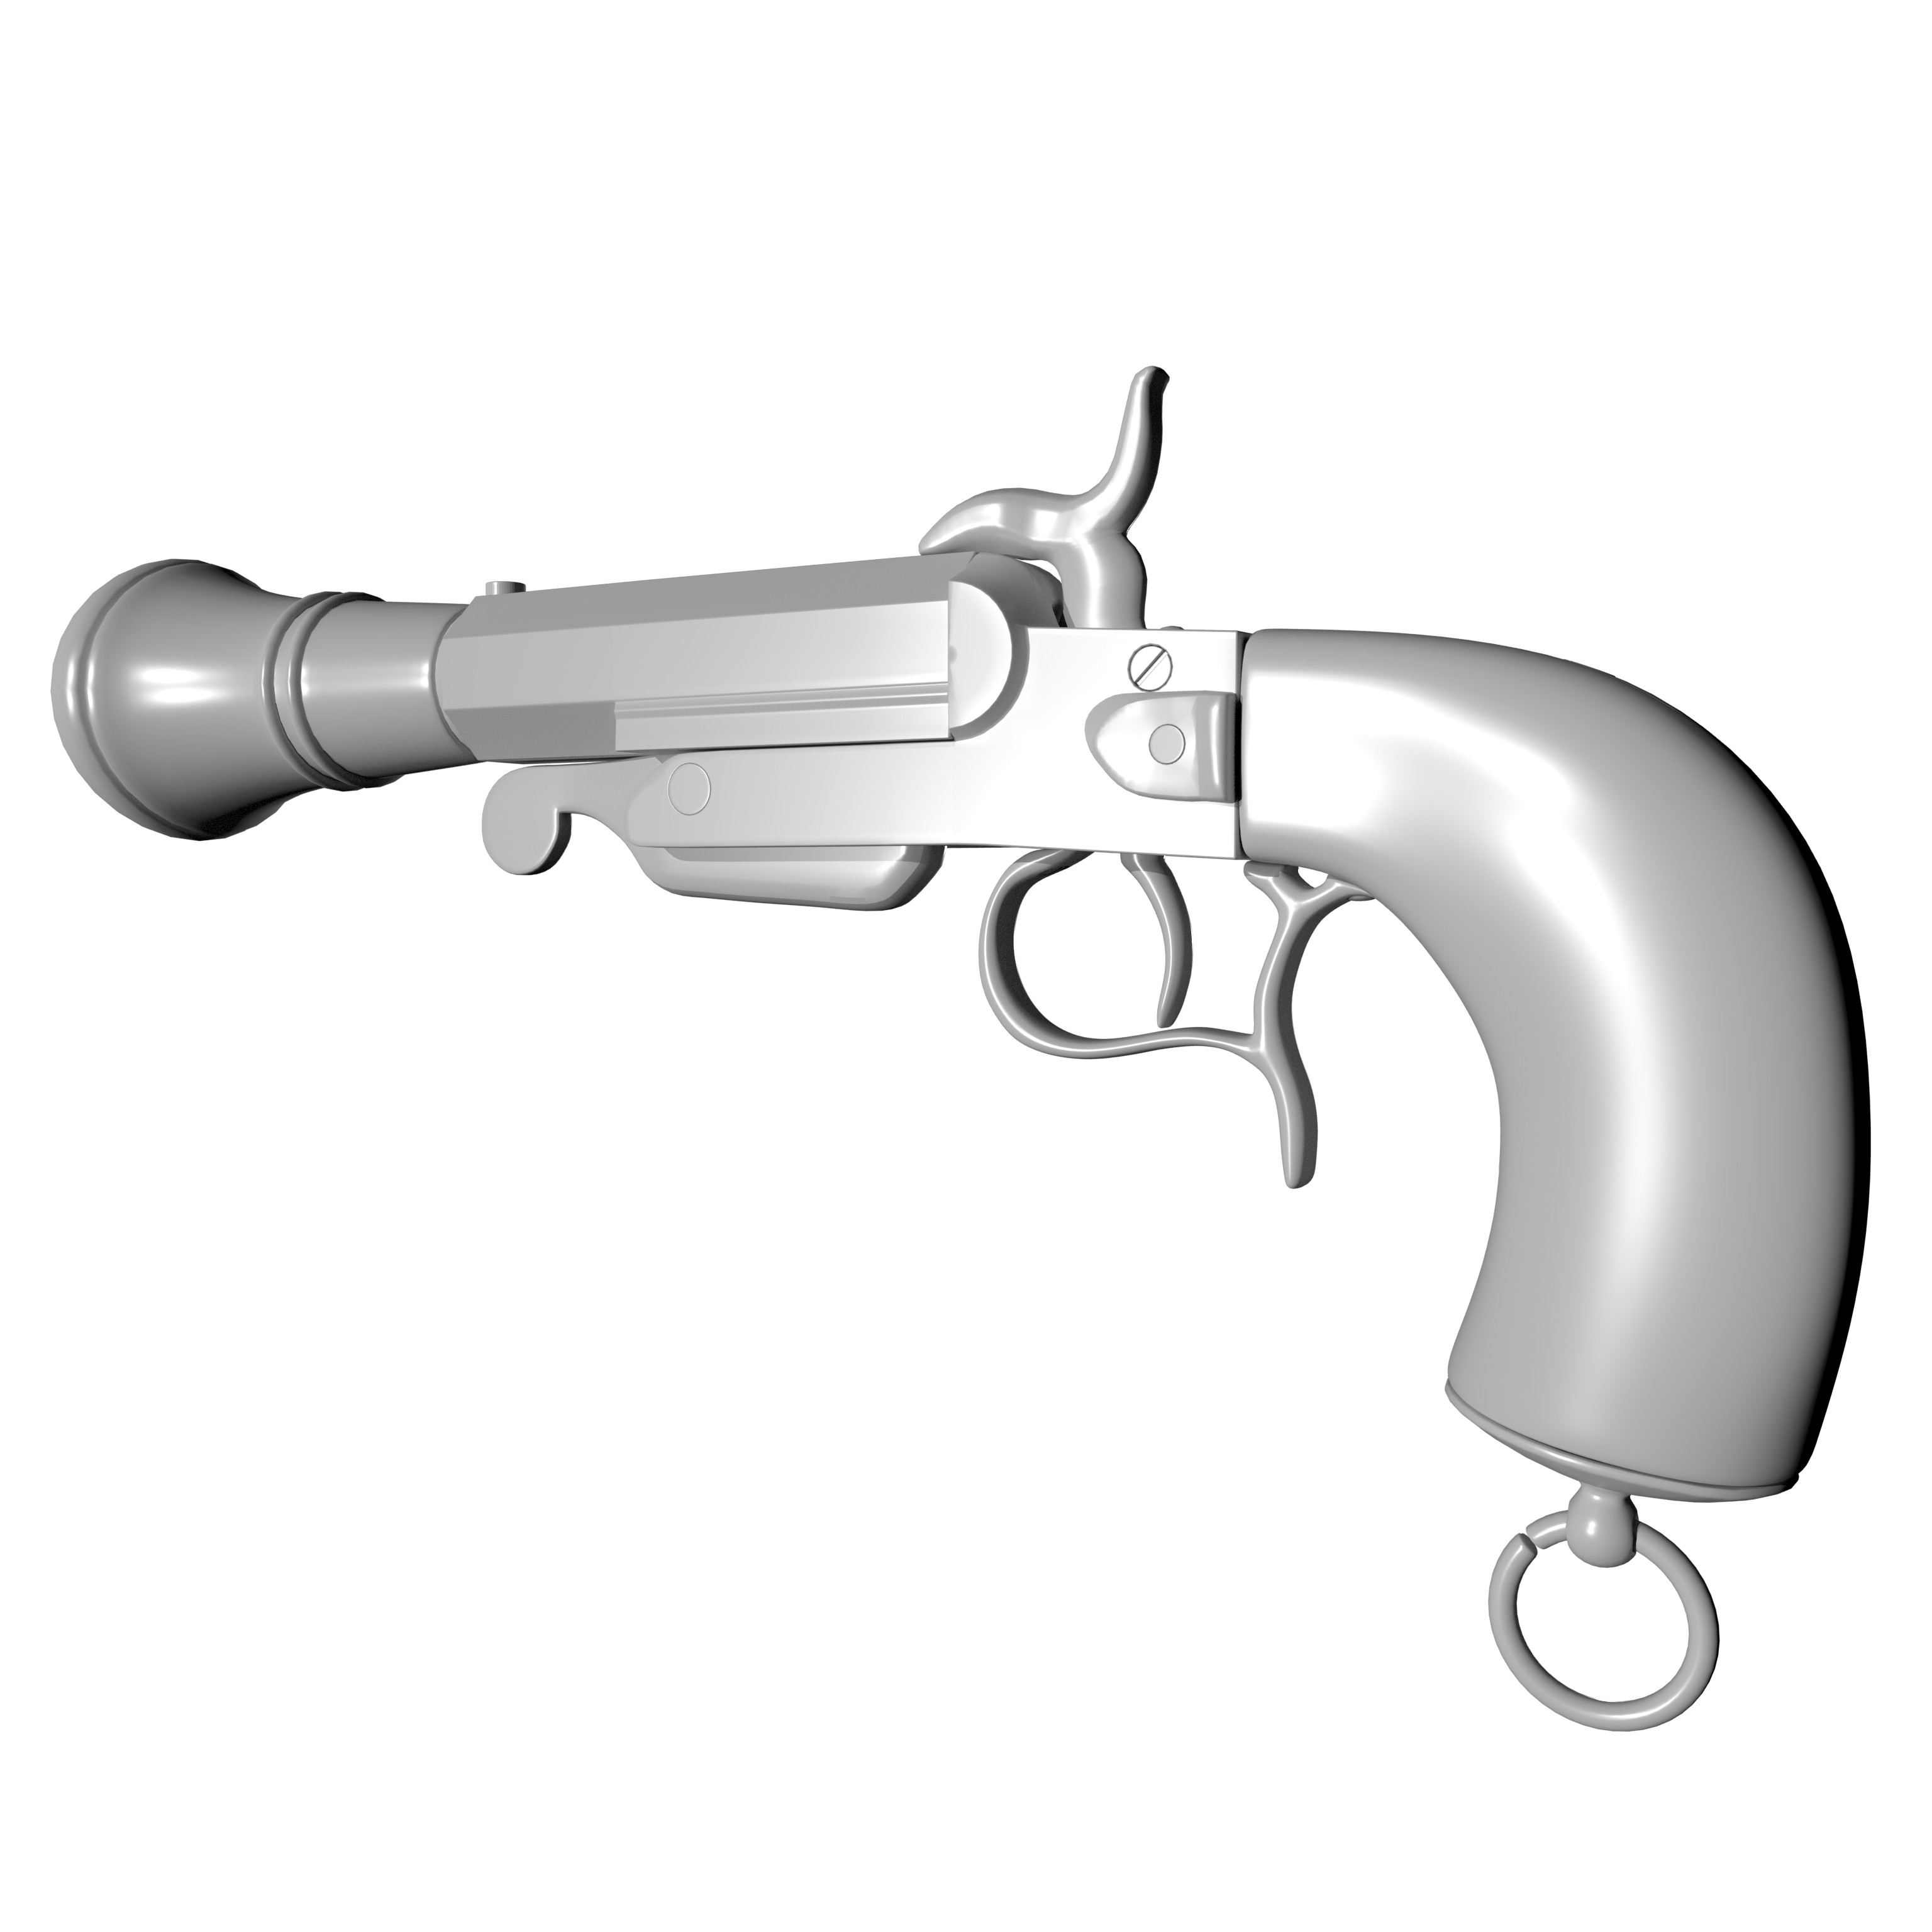 A Blunderbuss pistol model I created in Maya 2019. Maybe a little too dense...